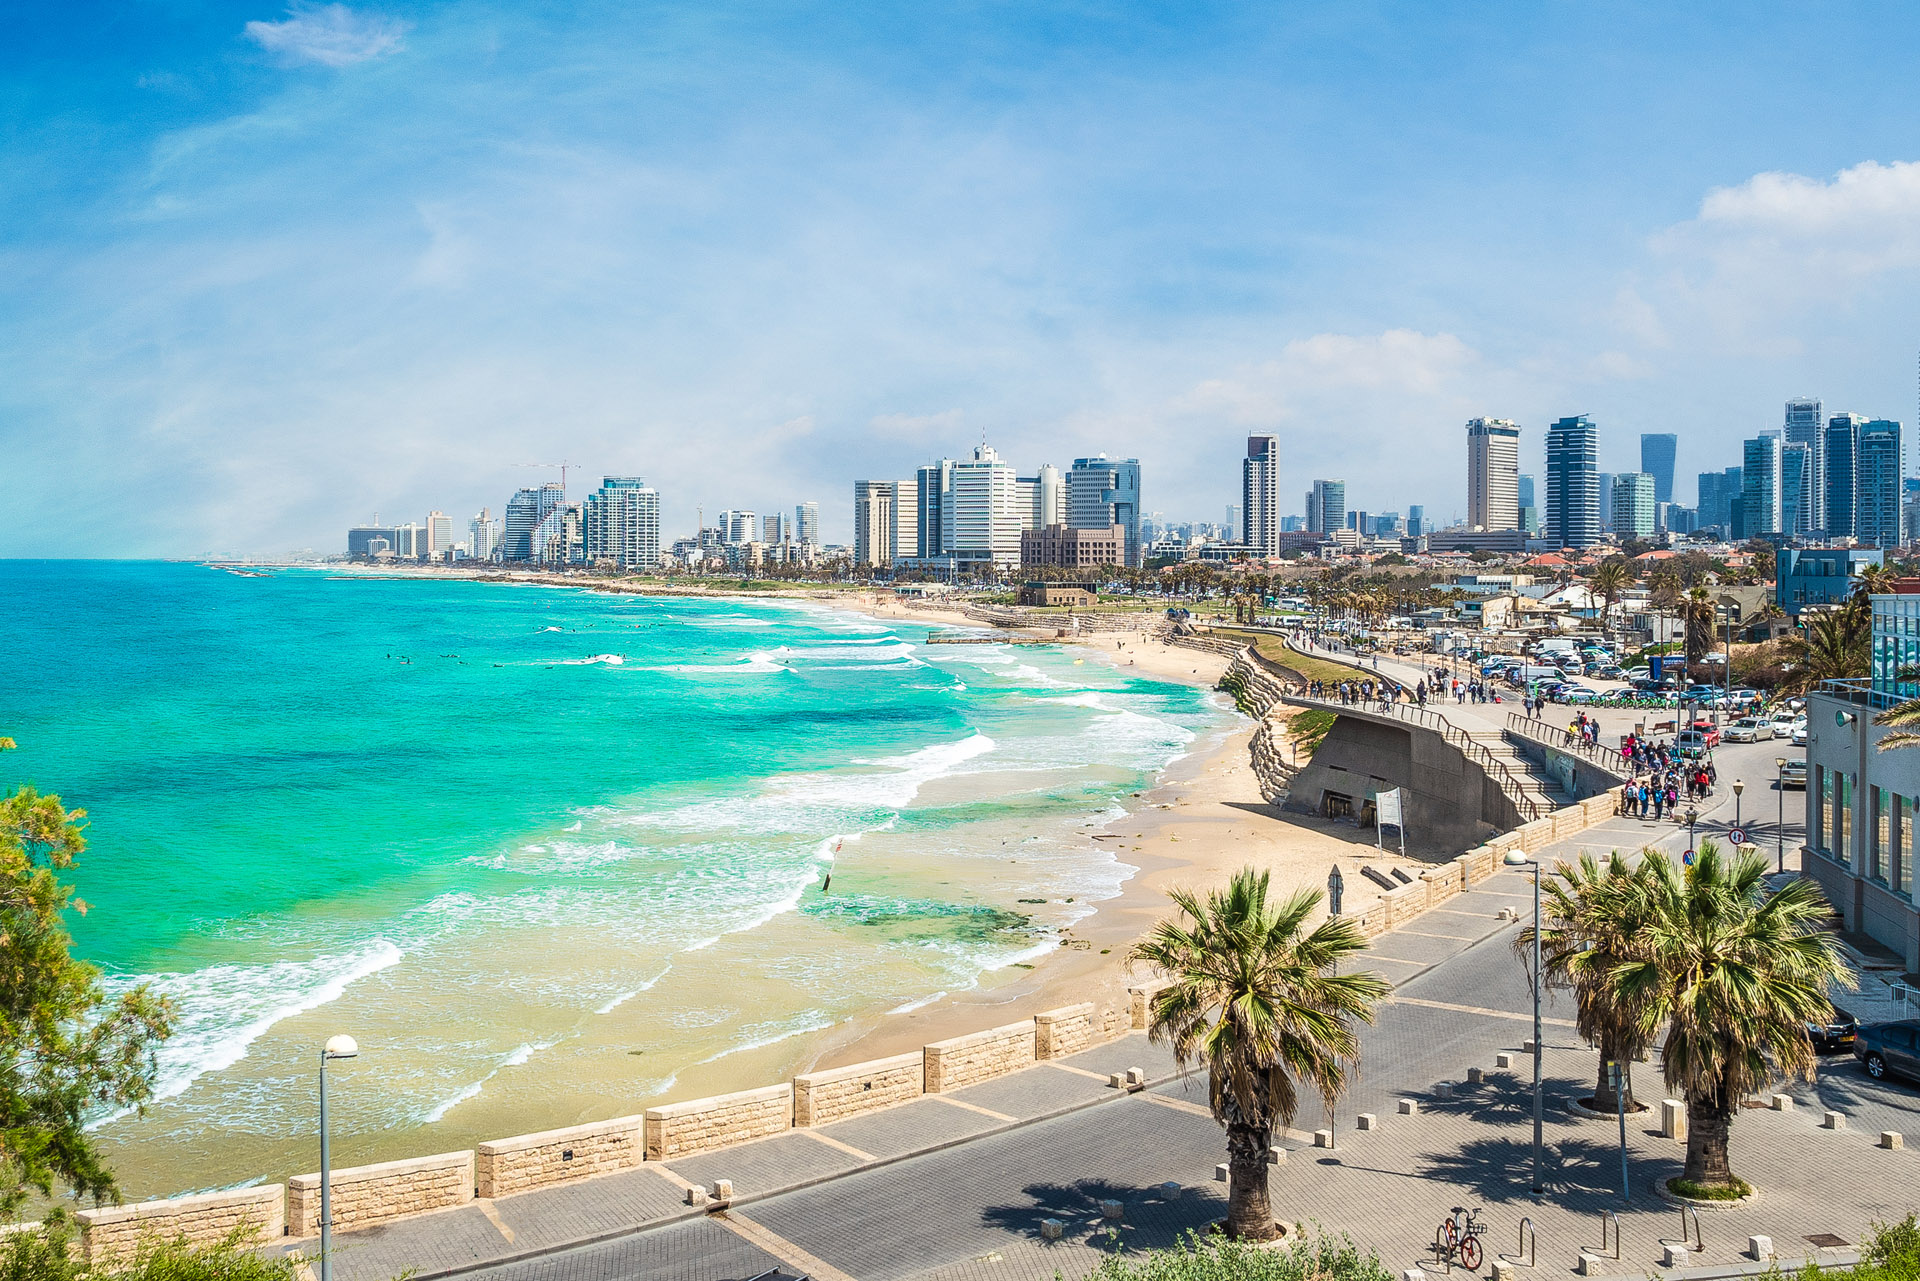 tel aviv cityscape on the coast with turquoise sea